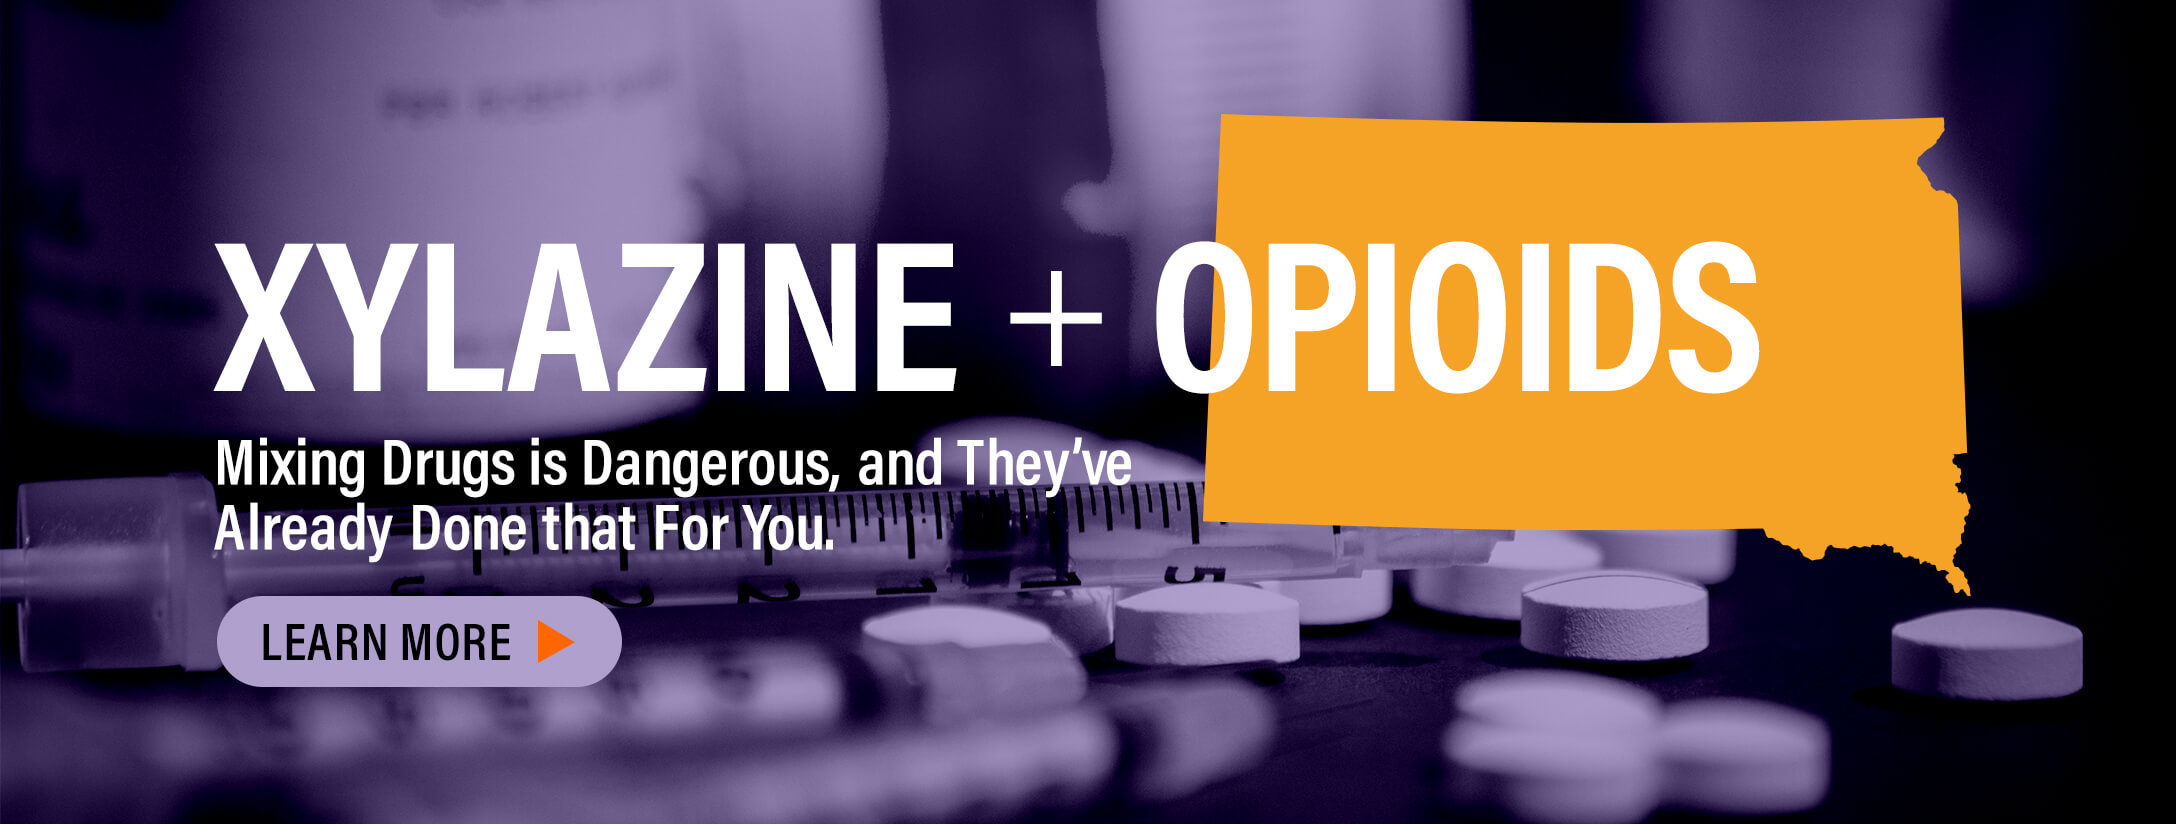 Xylazine + Opioids is one bad mix